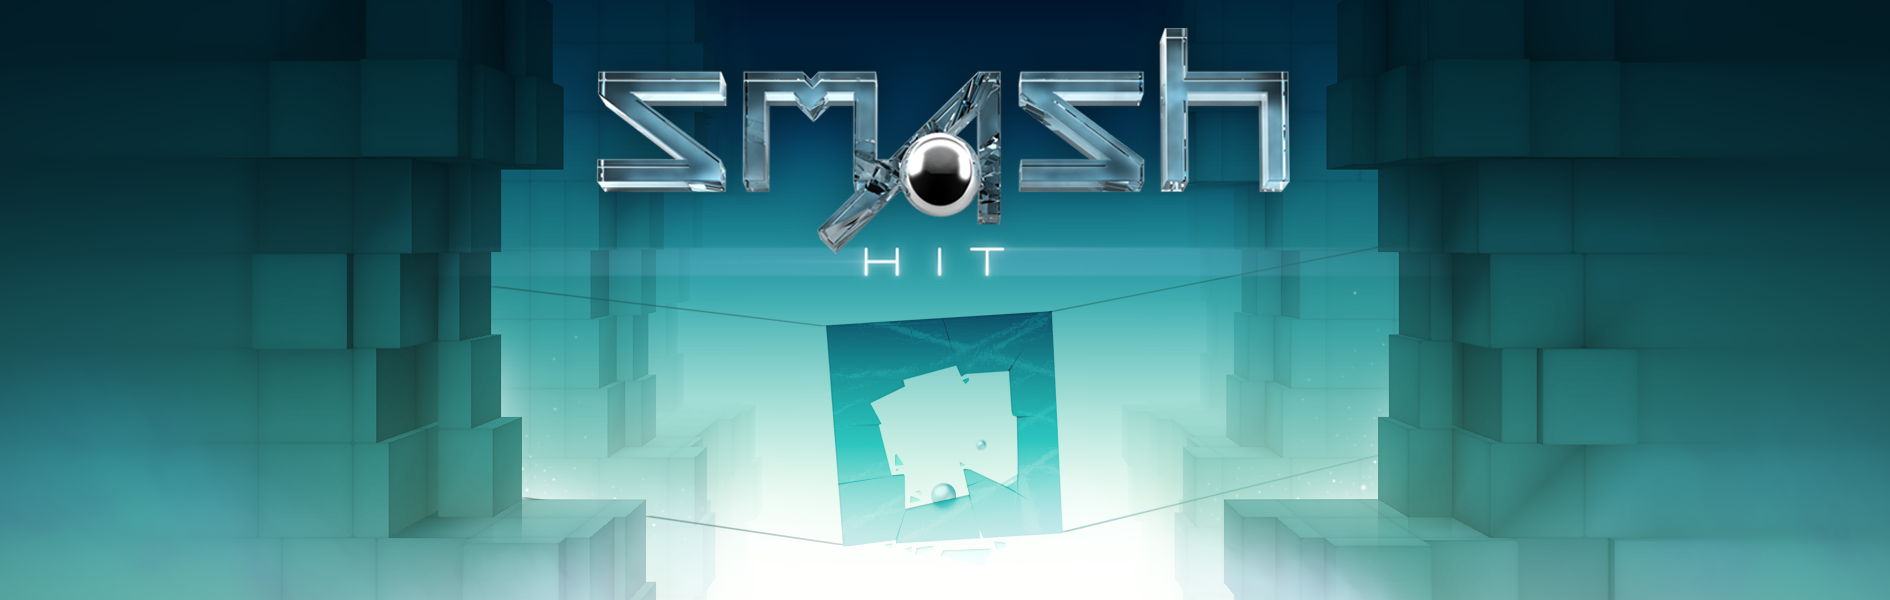 smash-hit-artwork2.png